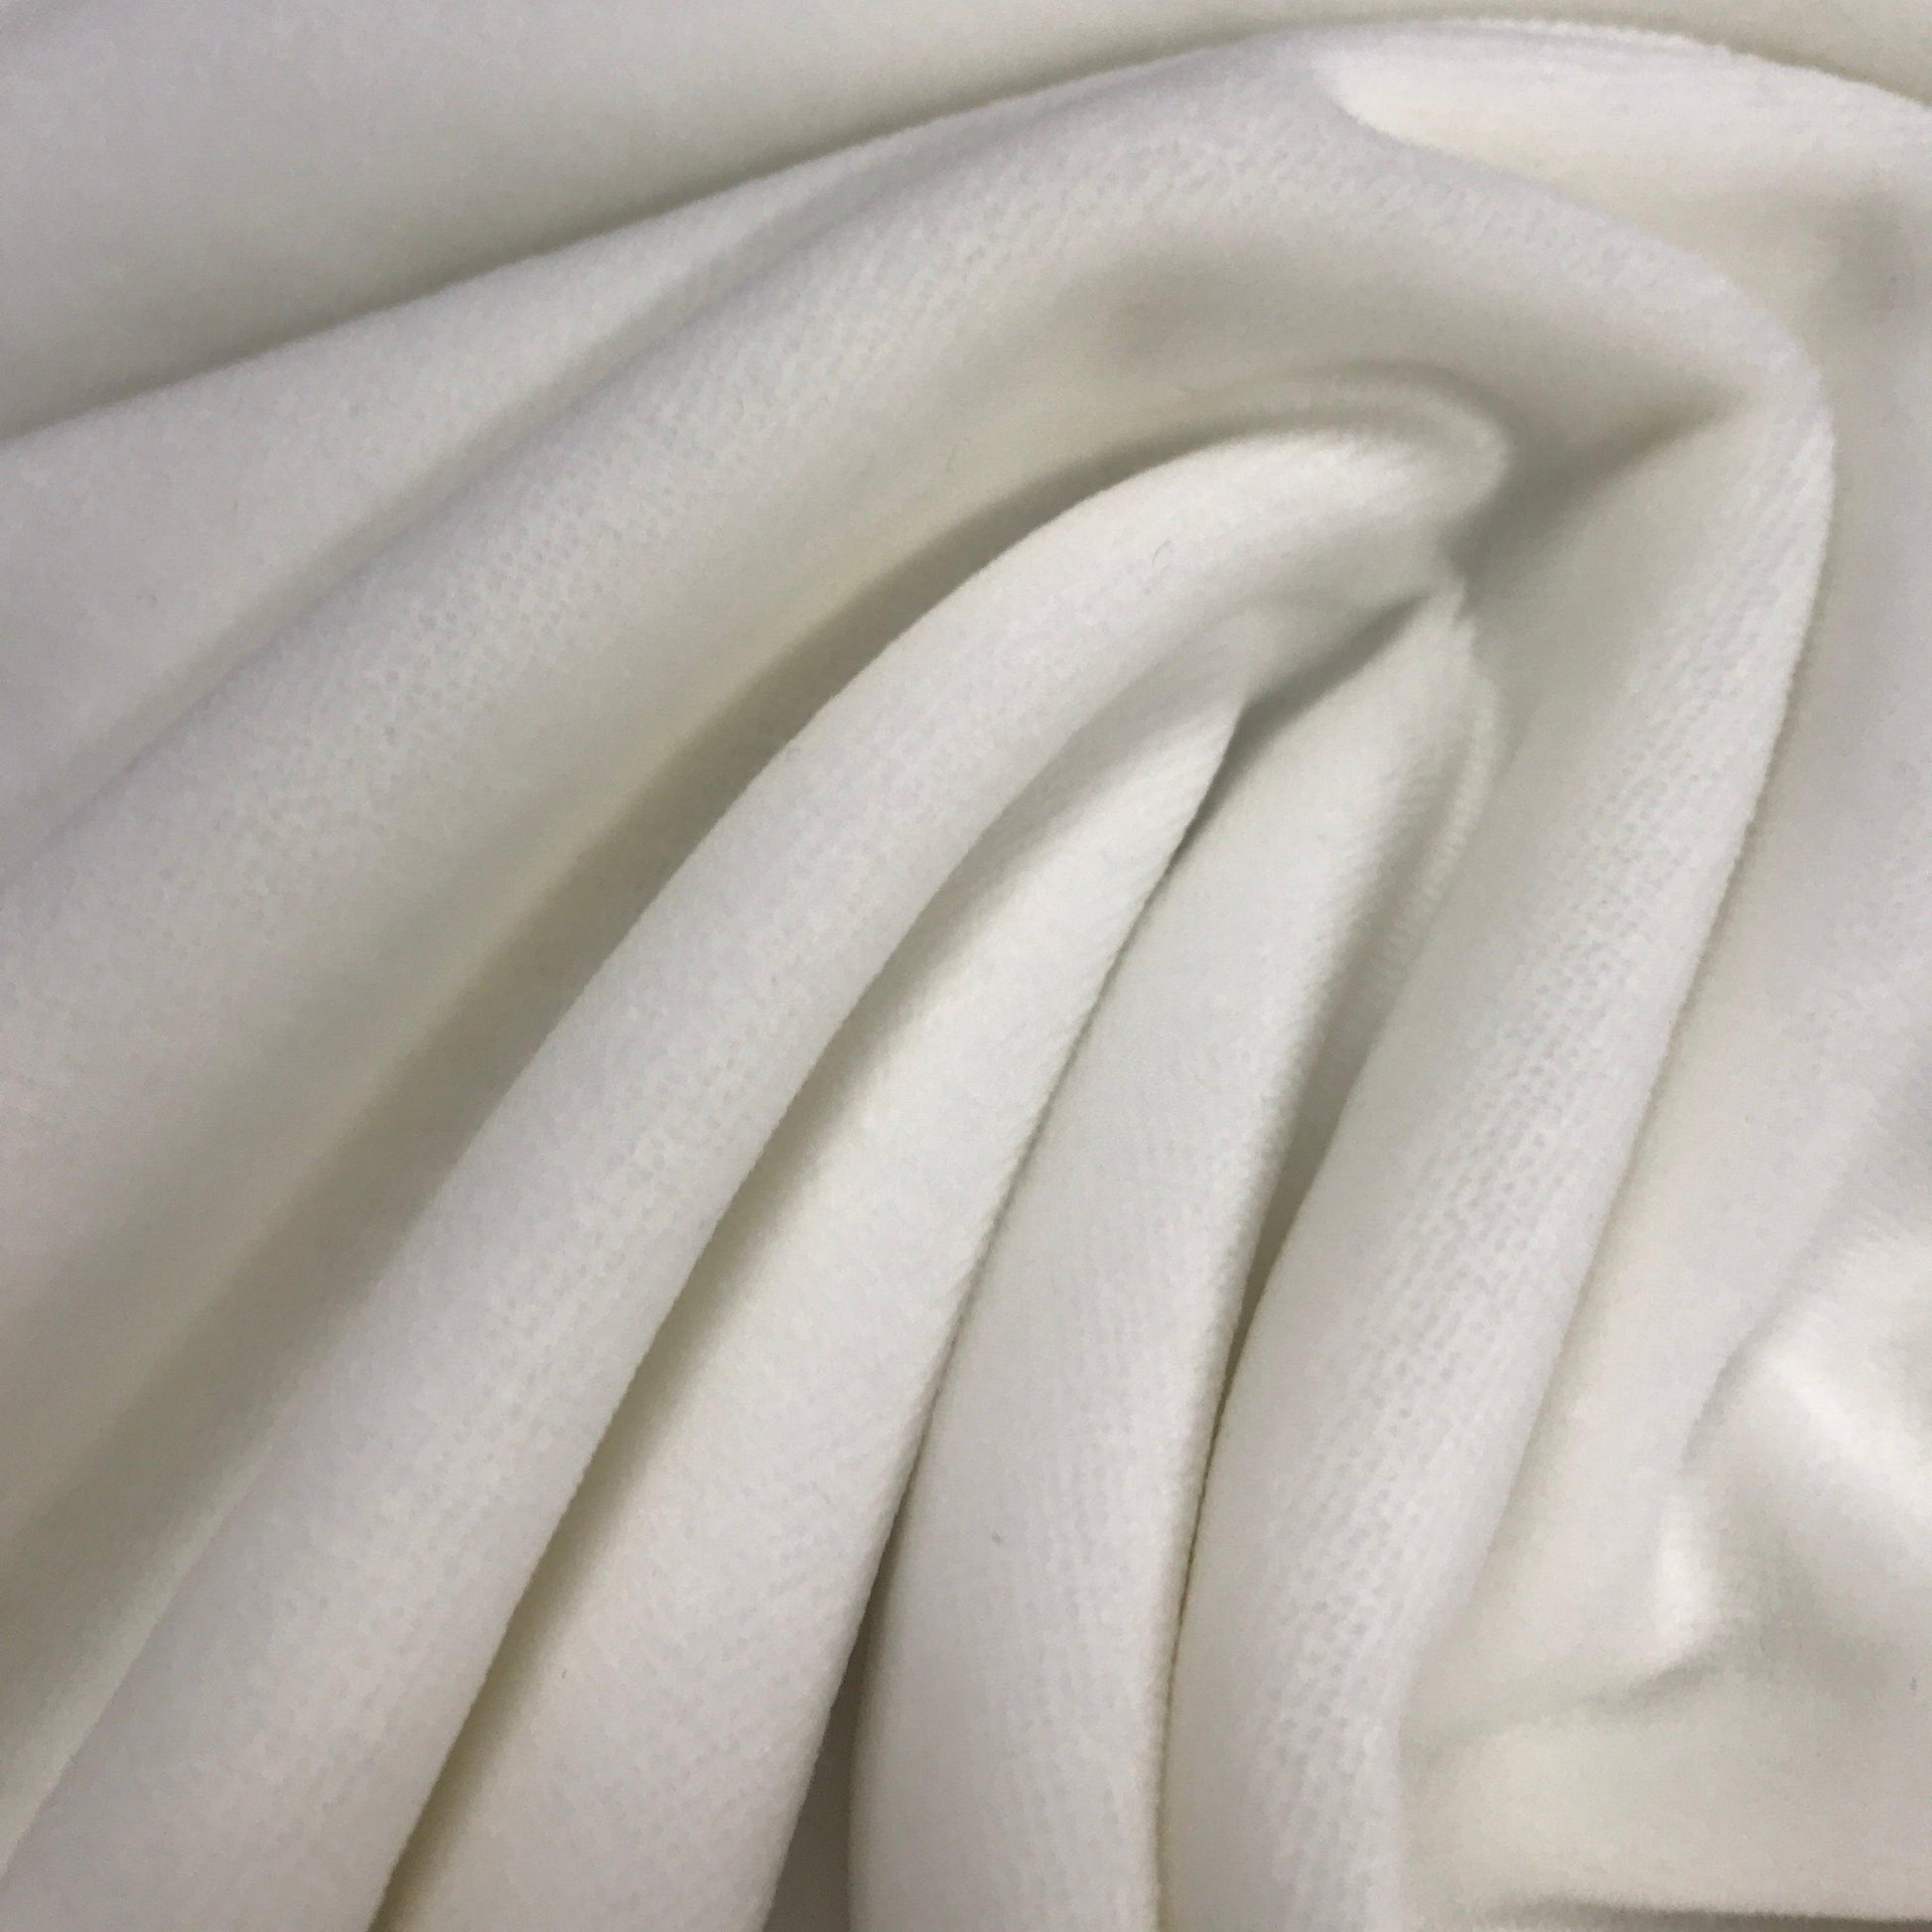 Off-White Organic Cotton Velour Fabric, $8.59/yd - Rolls - Nature's Fabrics